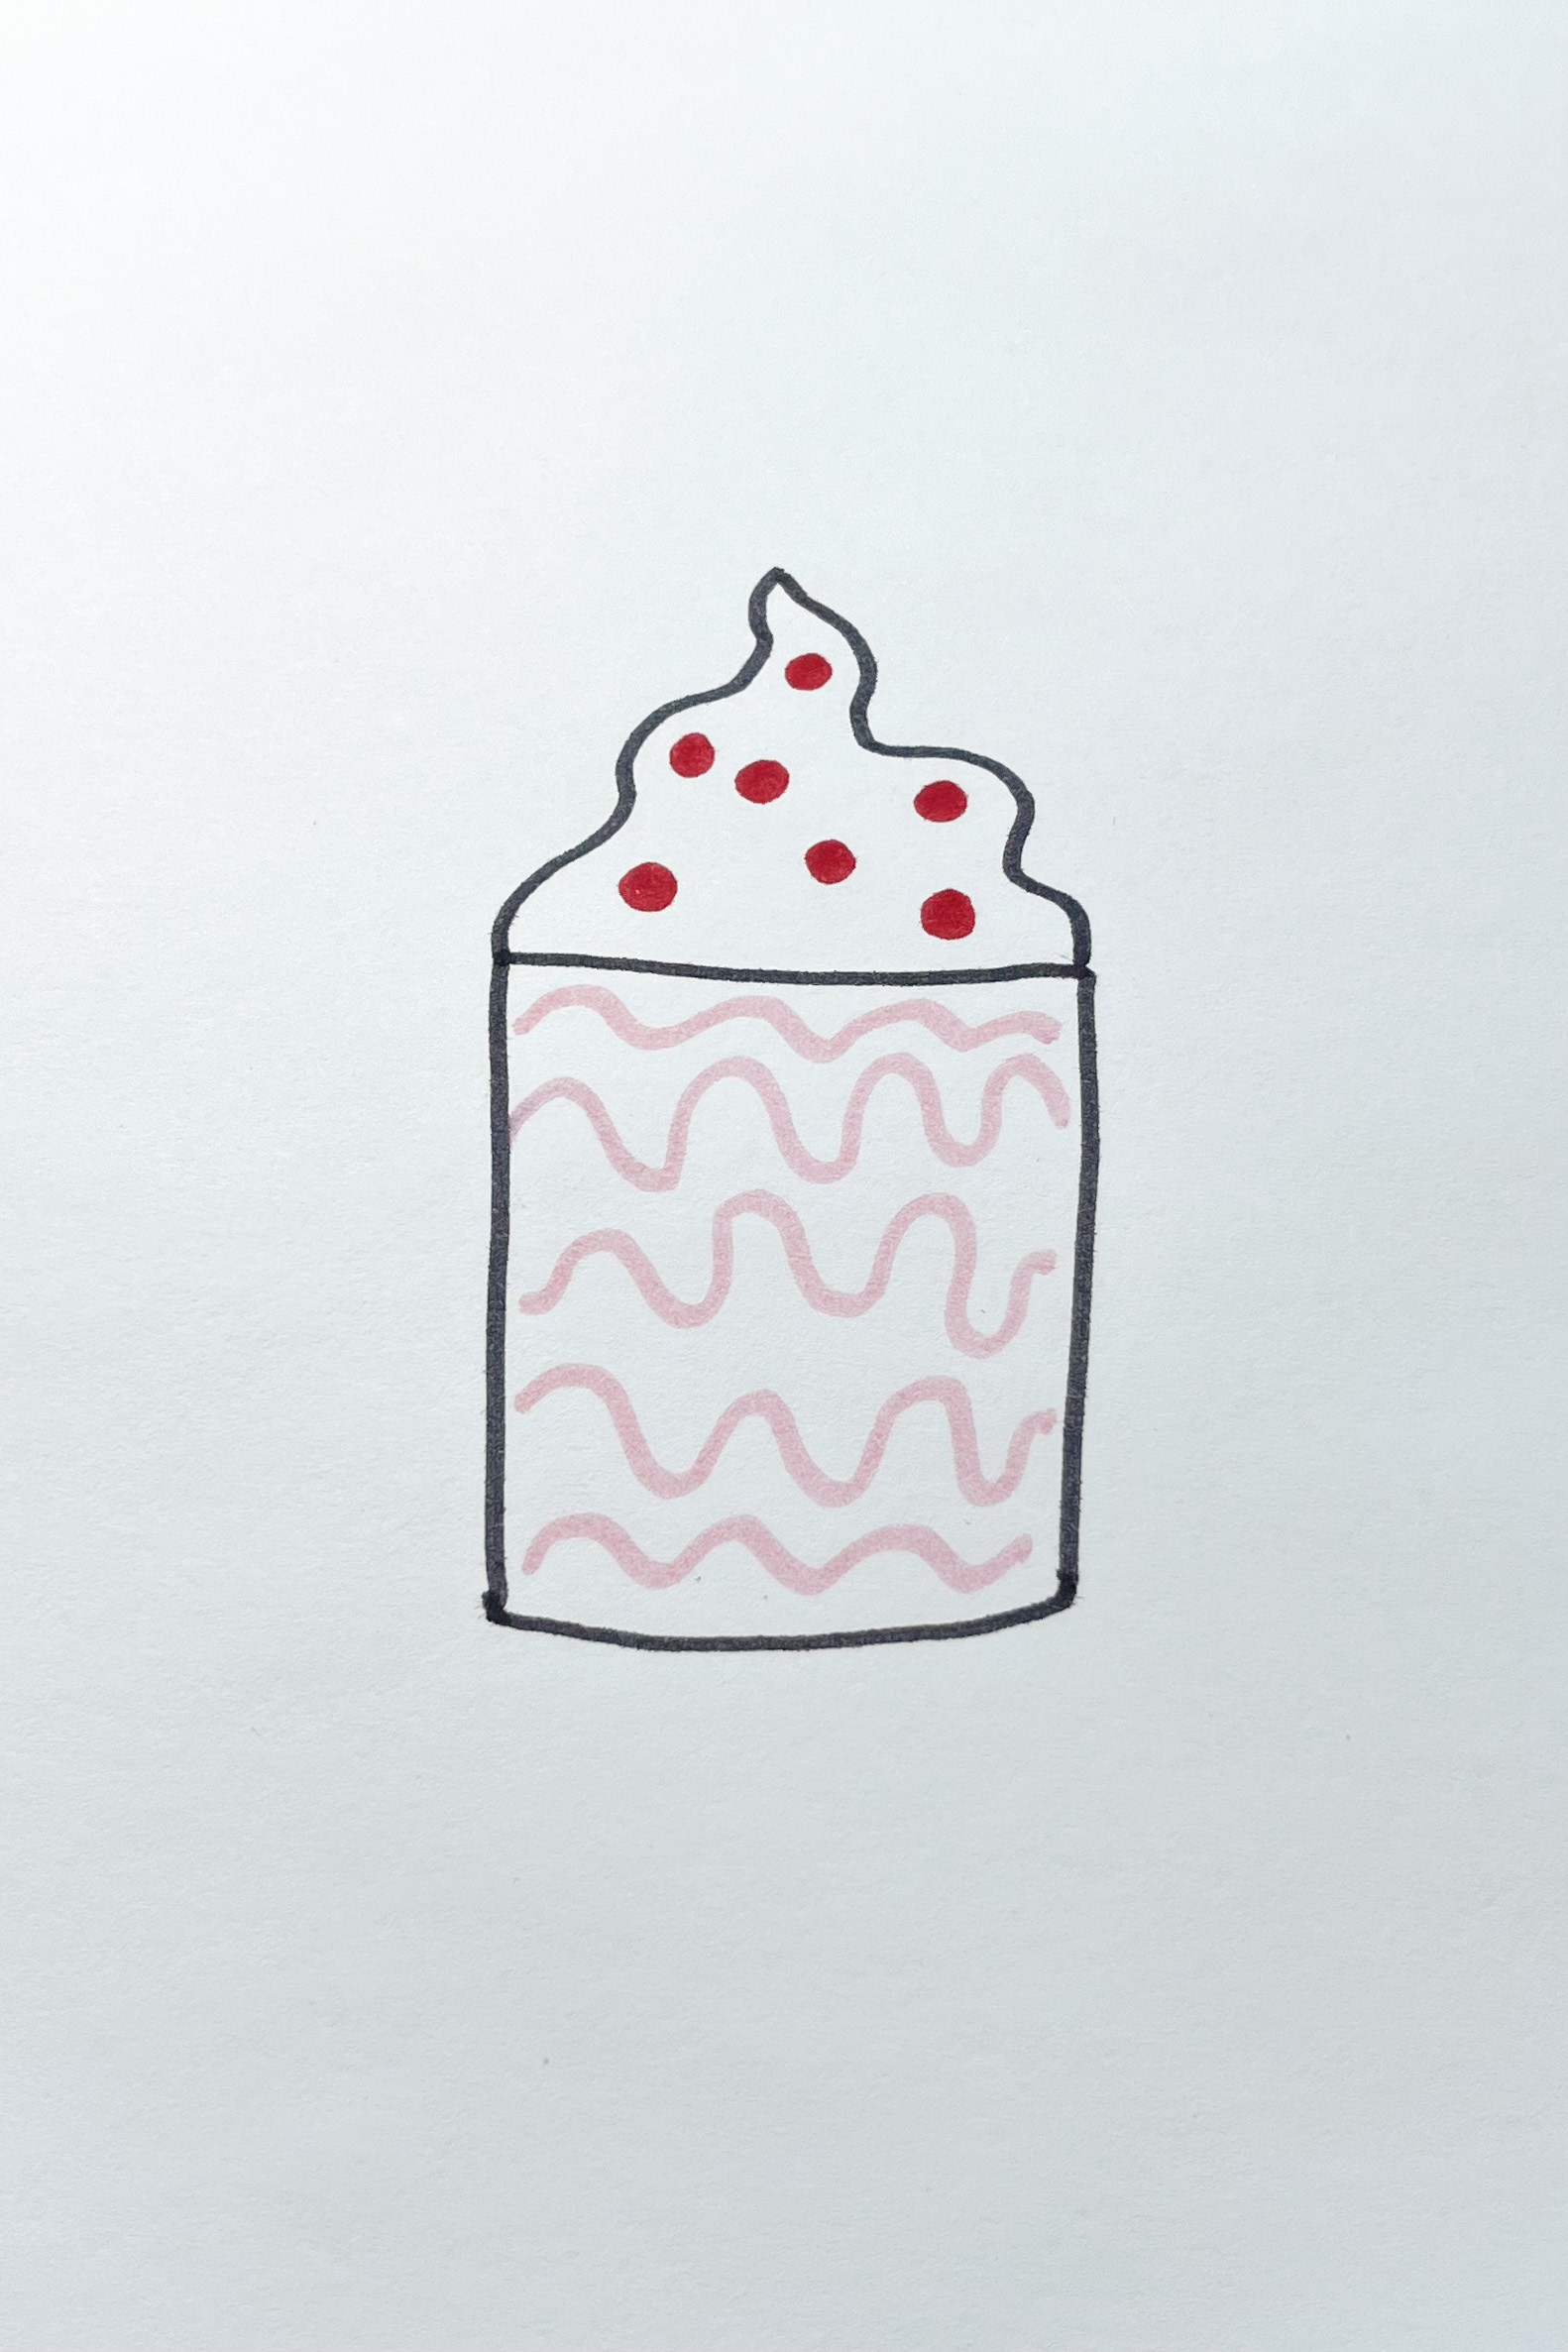 strawberry milkshake drawing